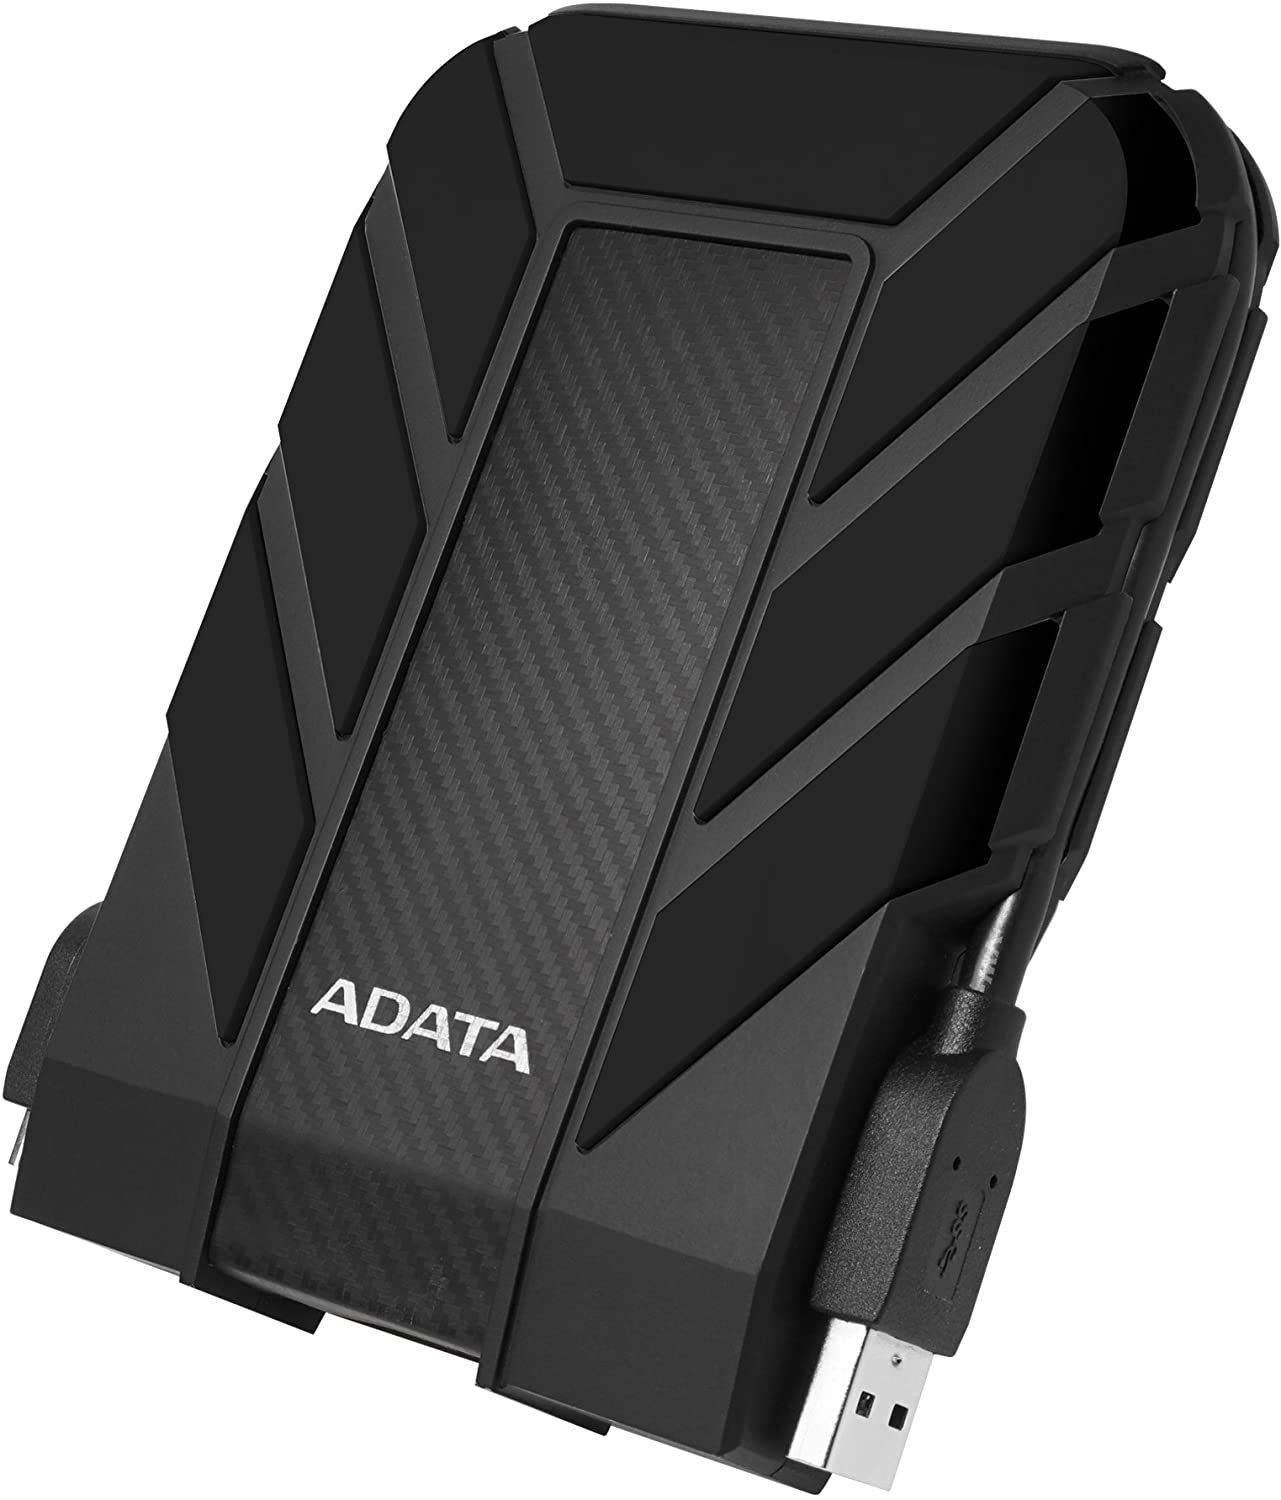 ADATA SD700 External Hard Drive (5 TB)